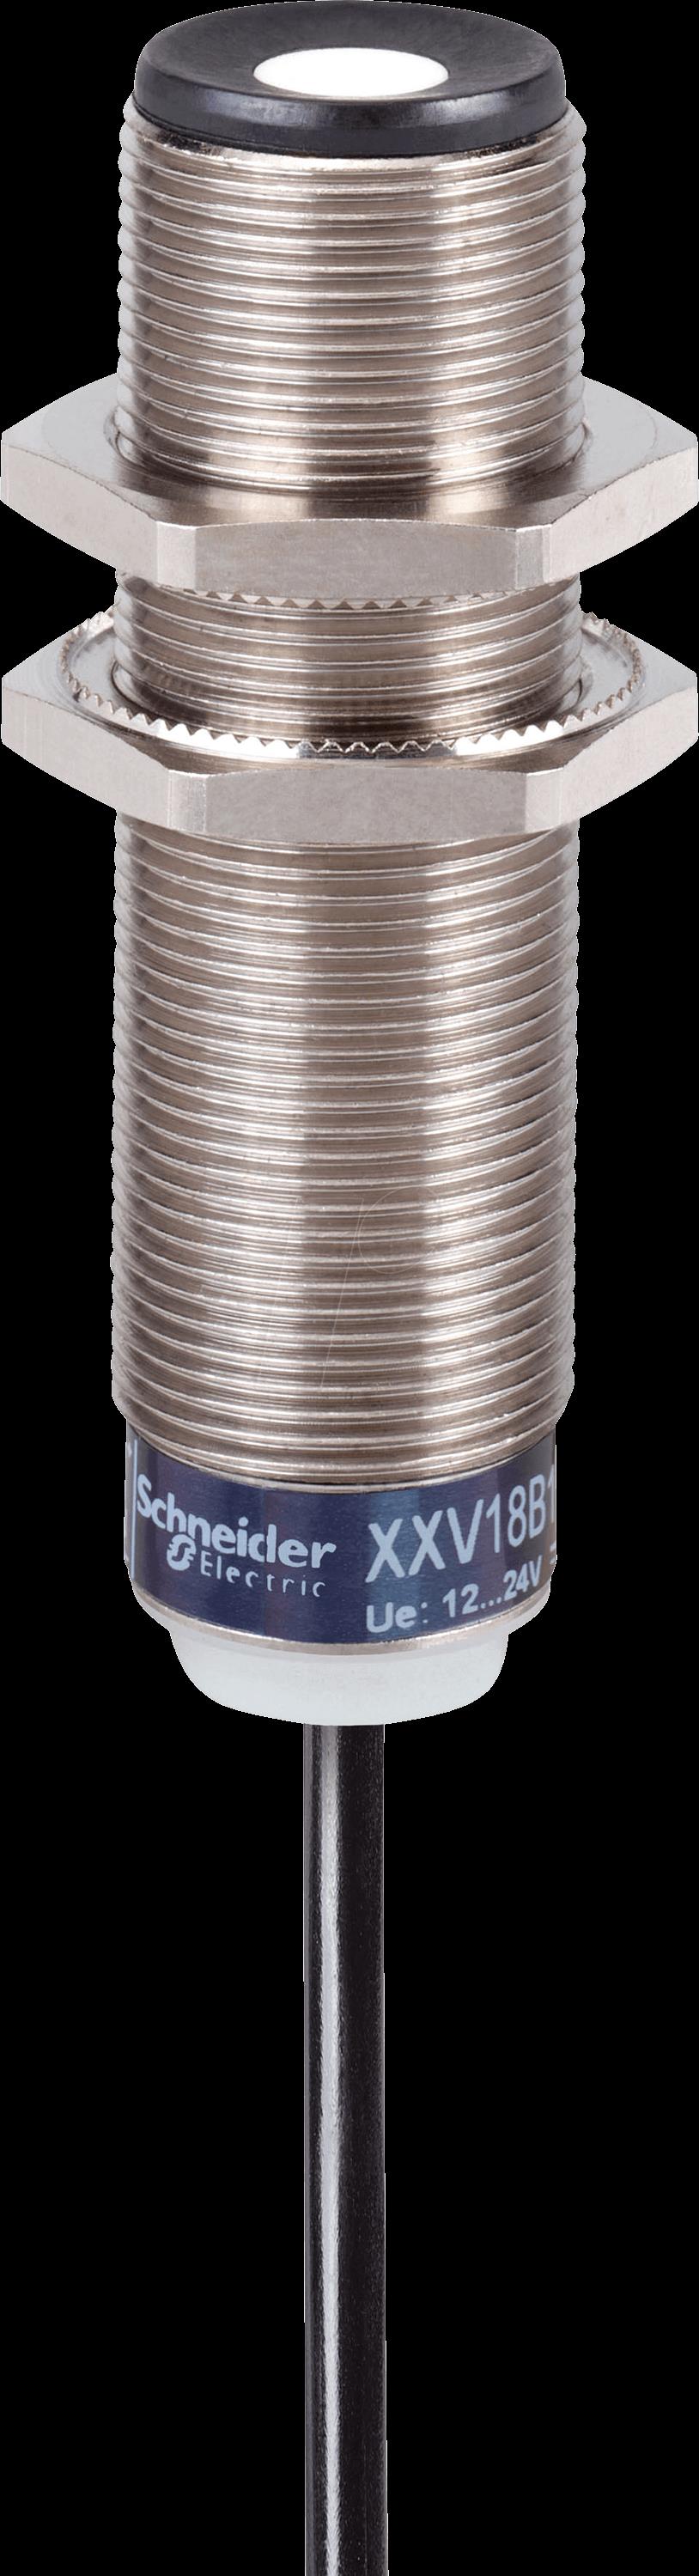 XXV18B1PAL2 - Ultraschall-Sensor PNP M18 Steckverbinder M12 50 m 65 (XXV18B1PAL2)